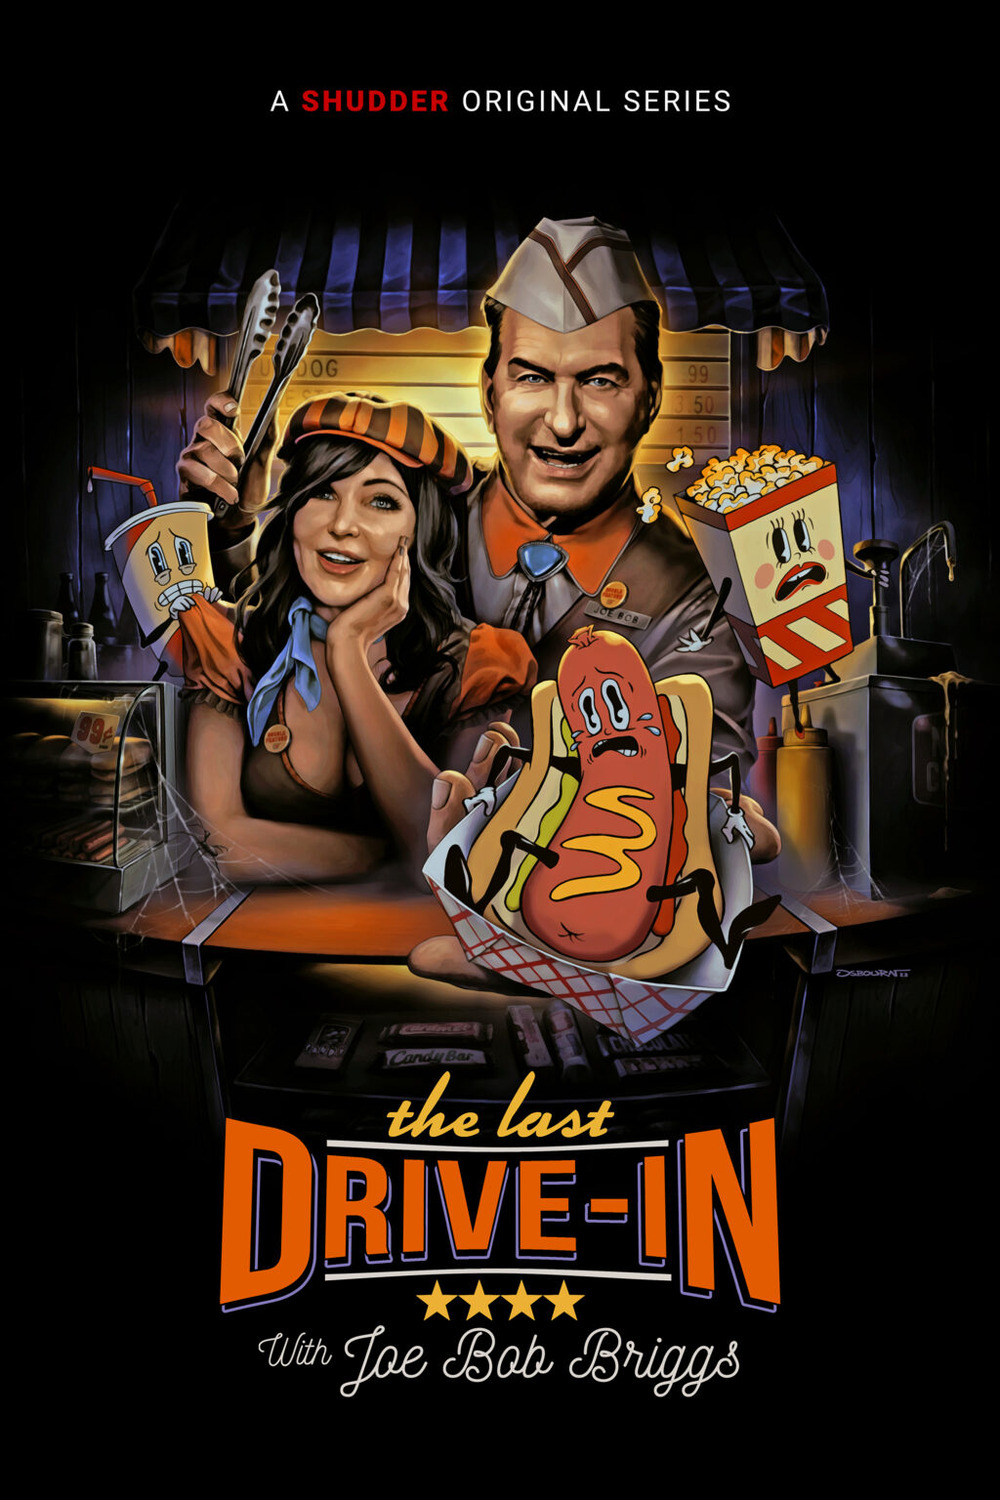 The Last DriveIn with Joe Bob Briggs Extra Large Movie Poster Image